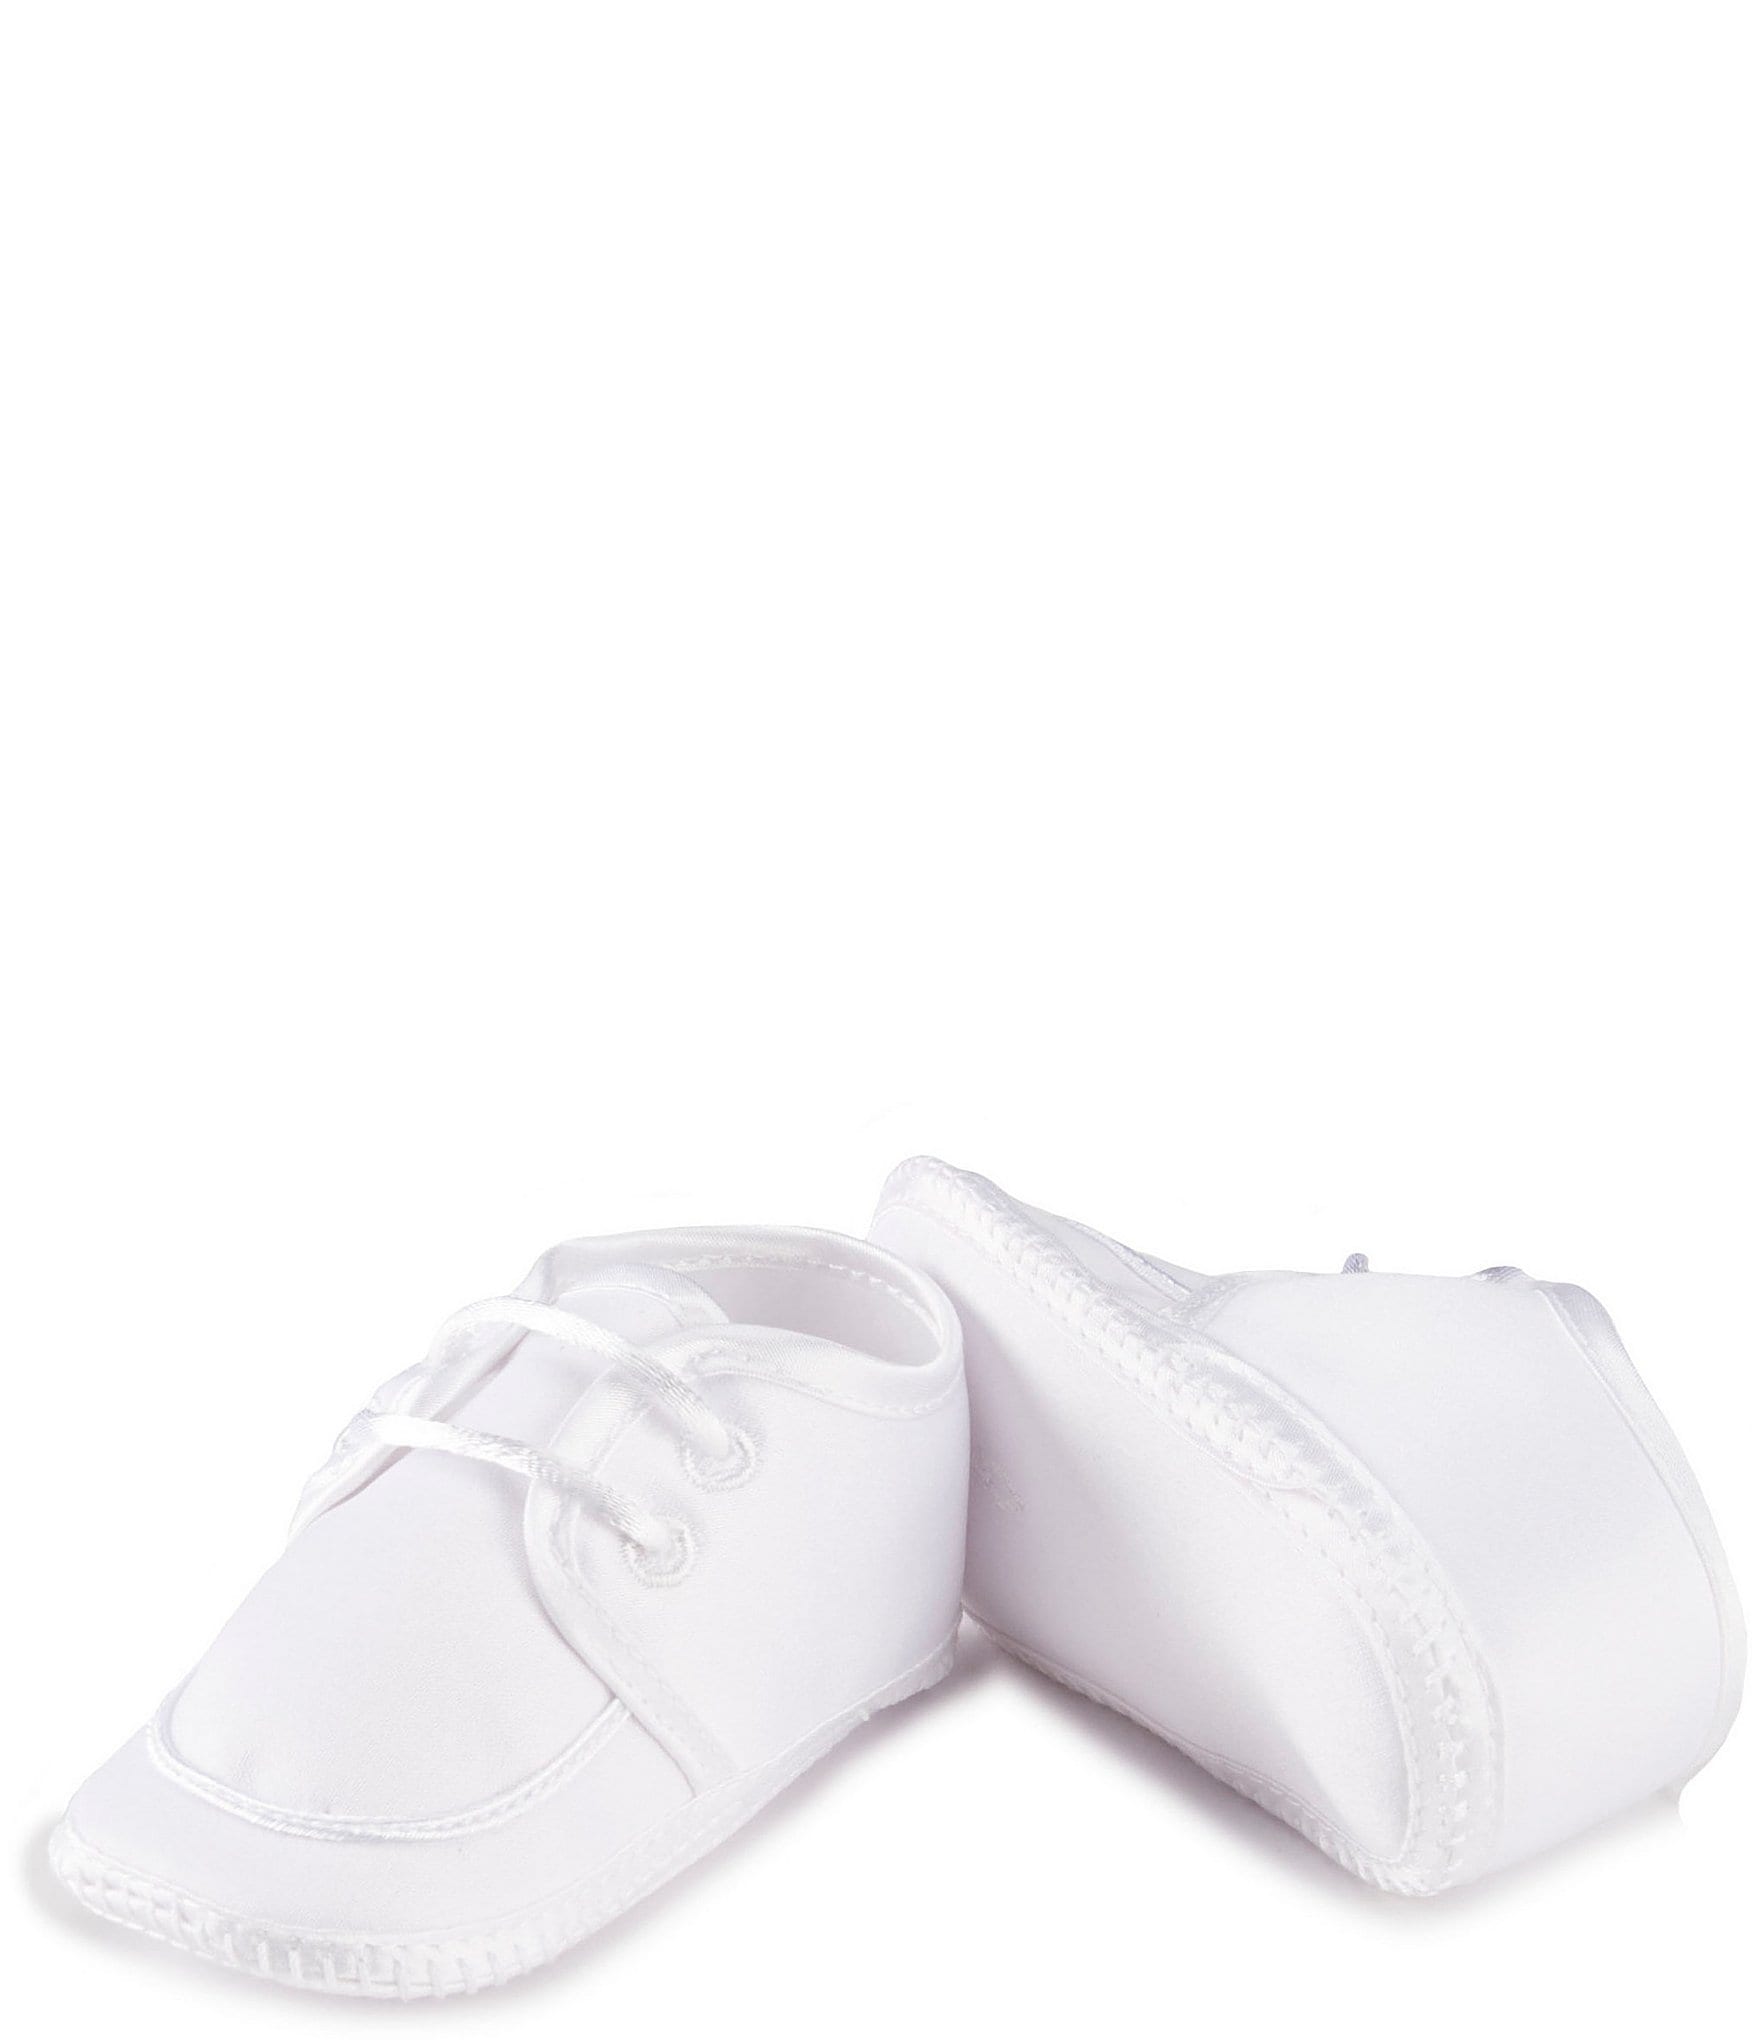 Zapatos de vestir para bebe Details about   Baby boy dress shoes White blanco wholesal niÑo 